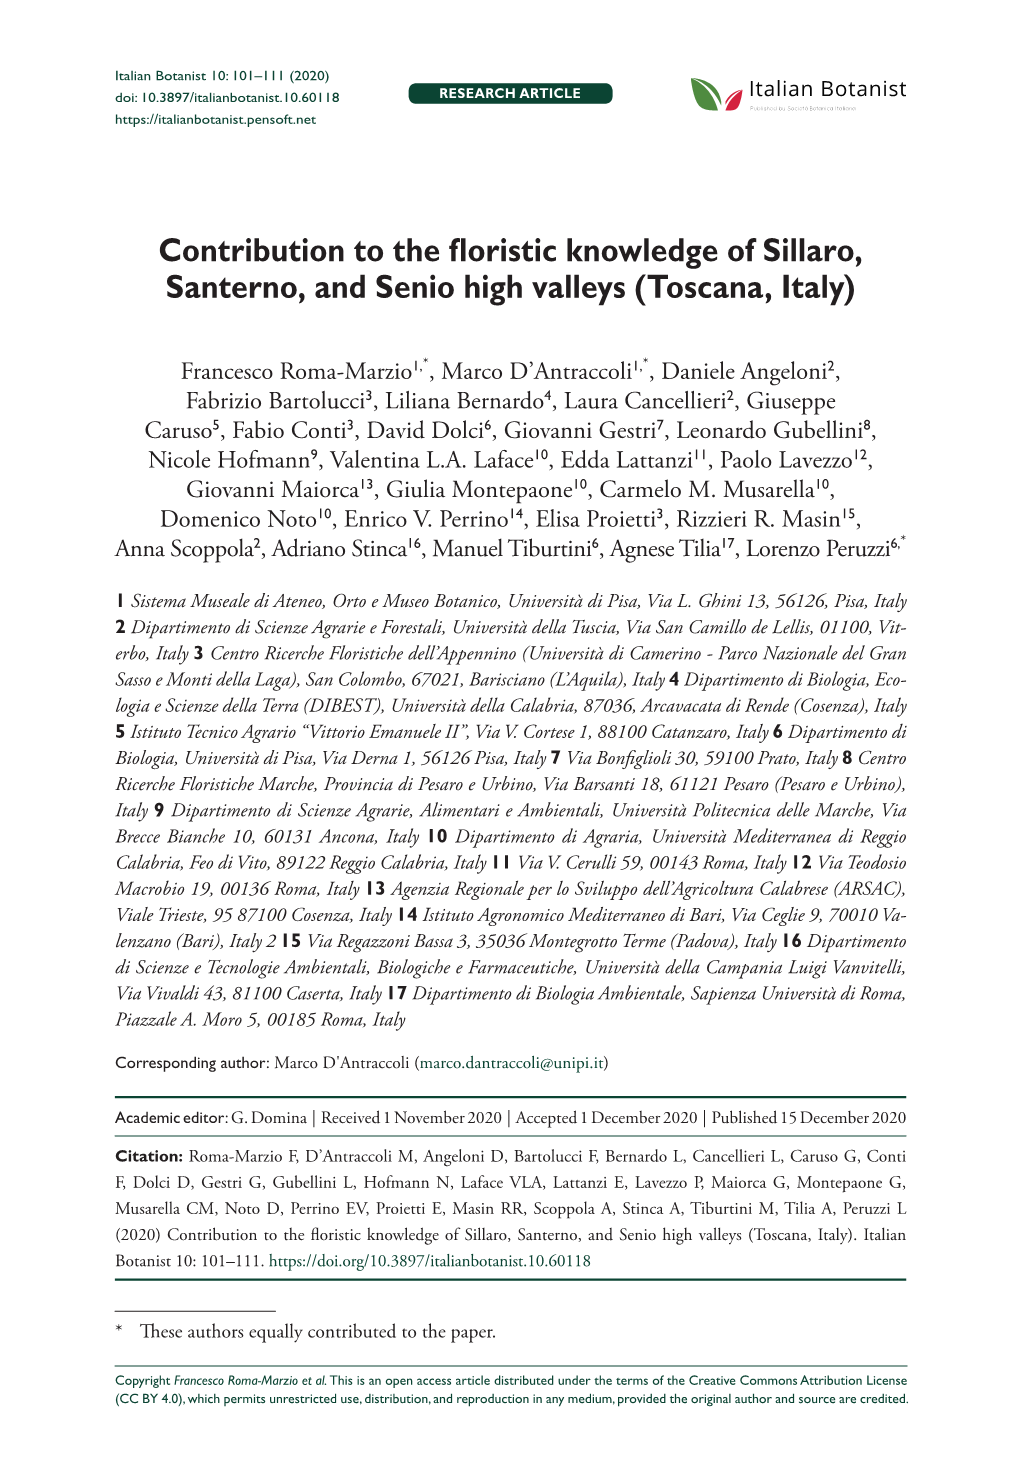 Contribution to the Floristic Knowledge of Sillaro, Santerno, and Senio High Valleys (Toscana, Italy)